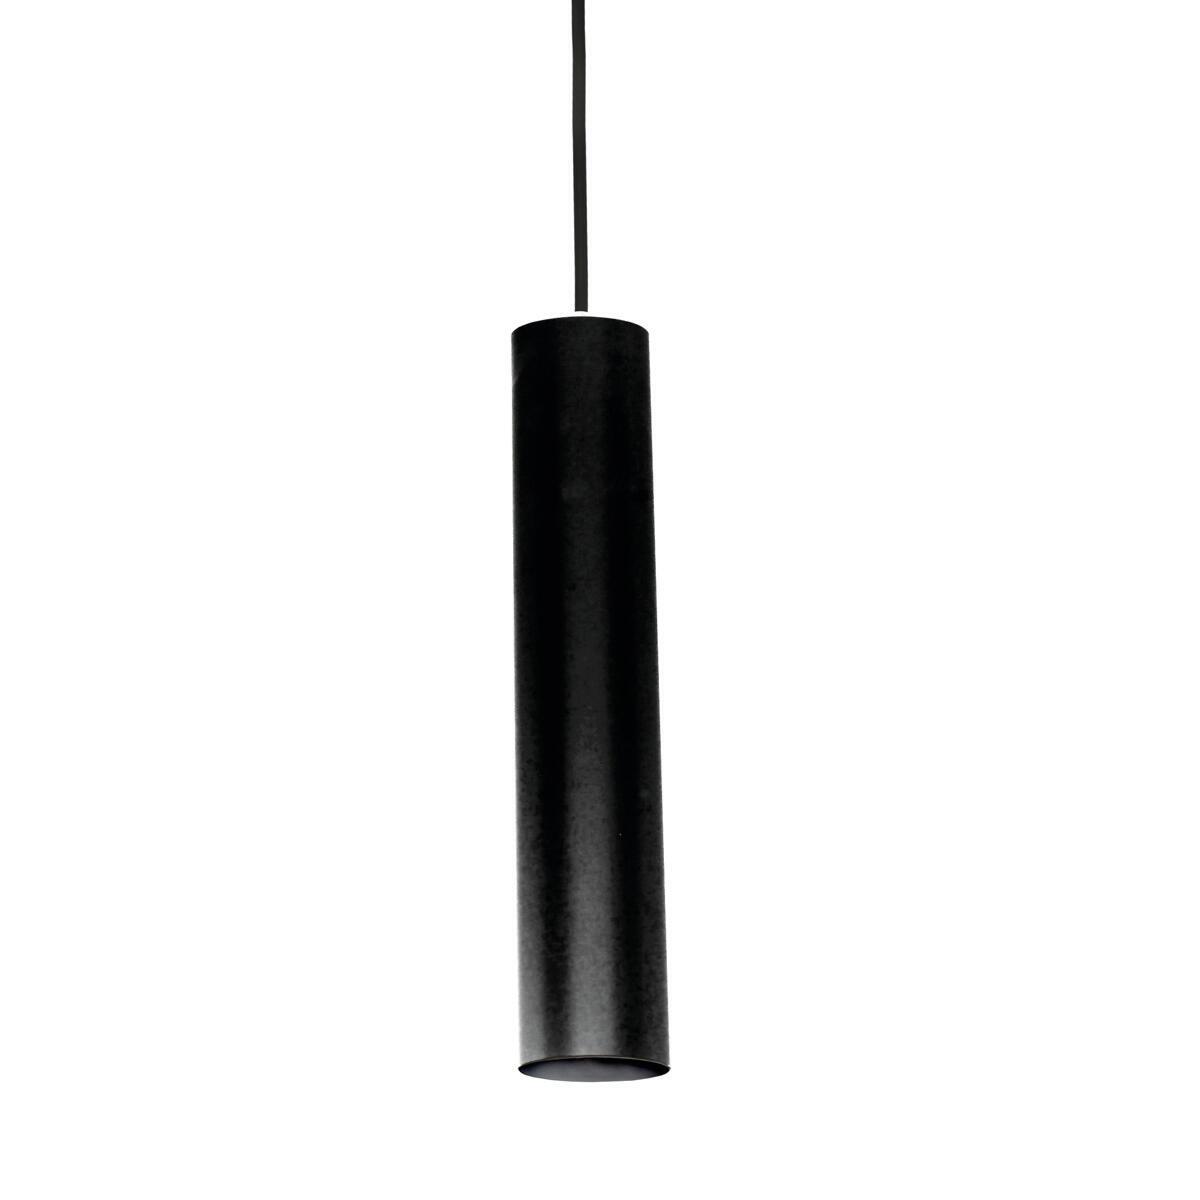 Lampadario Design Tubix nero in metallo, D. 8 cm, NOVECENTO - 5